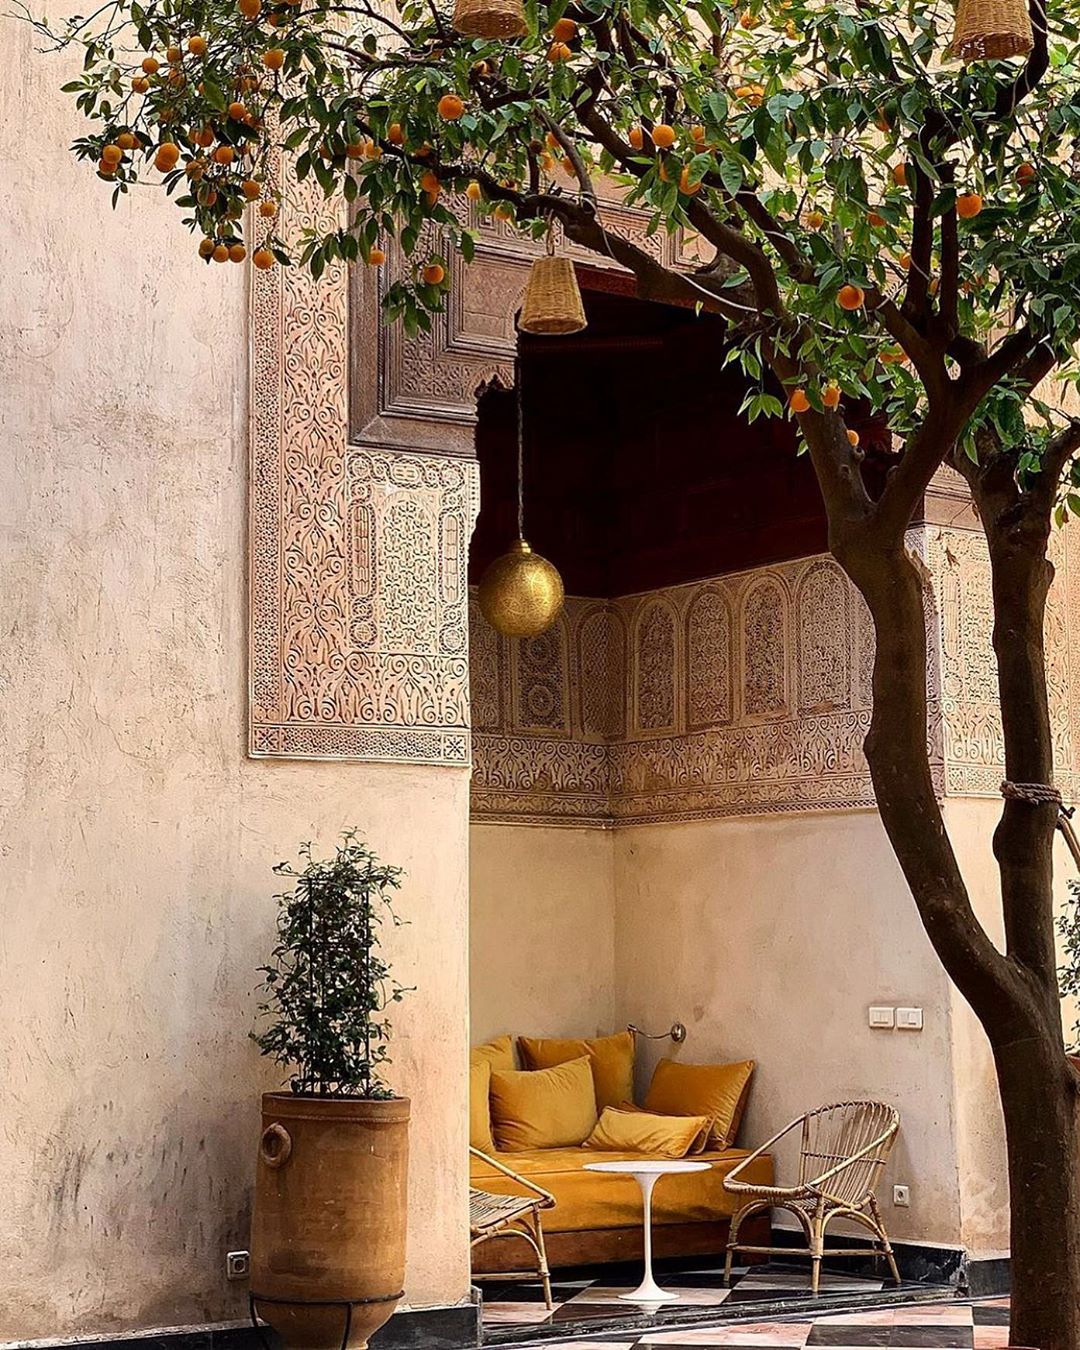 El Fenn, Marrakech - Luxury Boutique Hotel in Medina Photo by Willem Smit.